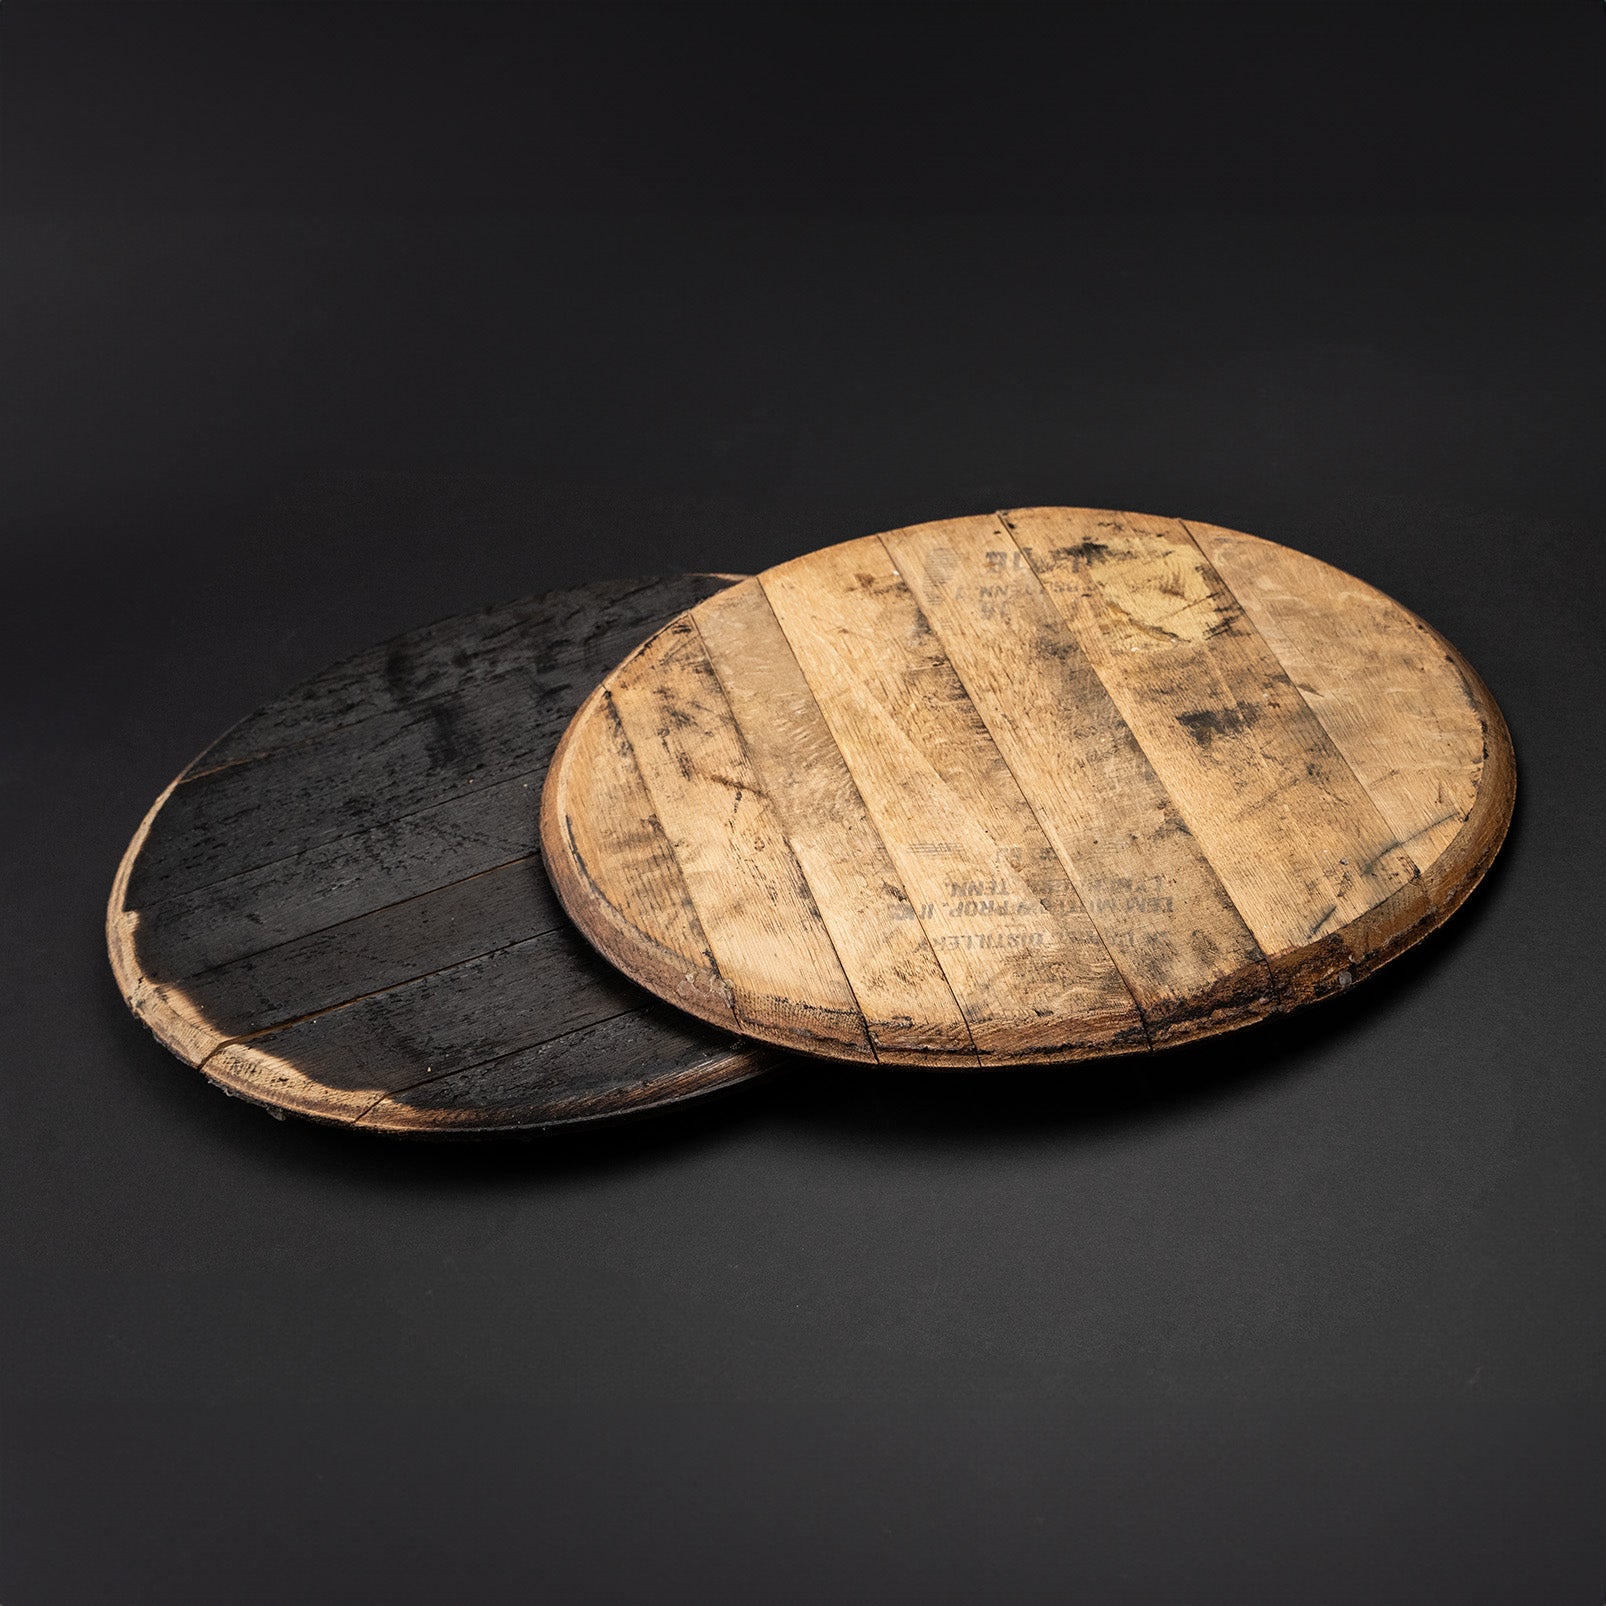 4/4 1” American Wormy Chestnut Wood Boards / Dimensional Lumber